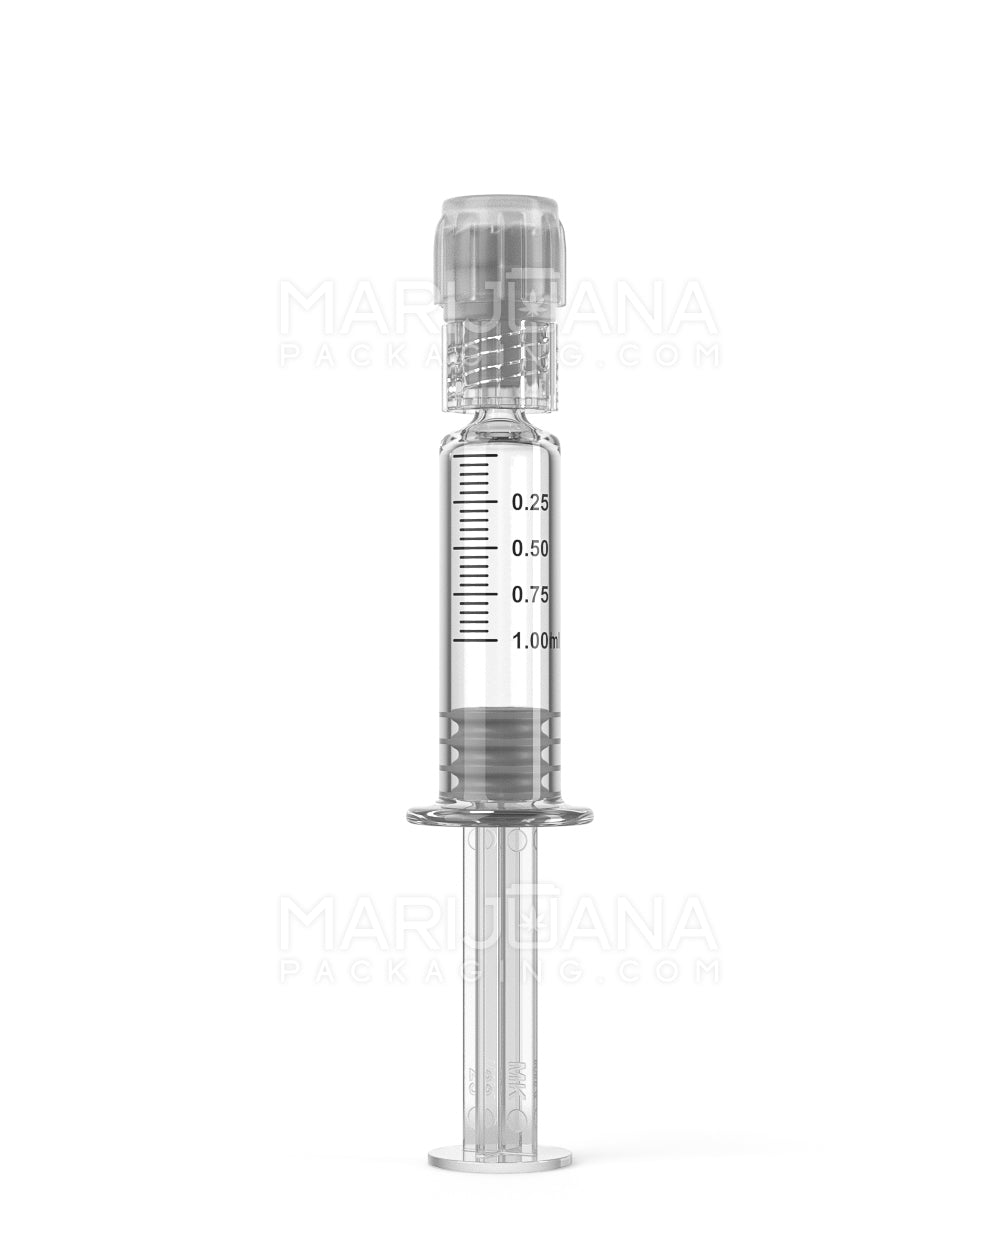 Child Resistant & Luer Lock Glass Dab Applicator Syringes | 1mL - 0.25mL Increments | Sample - 1